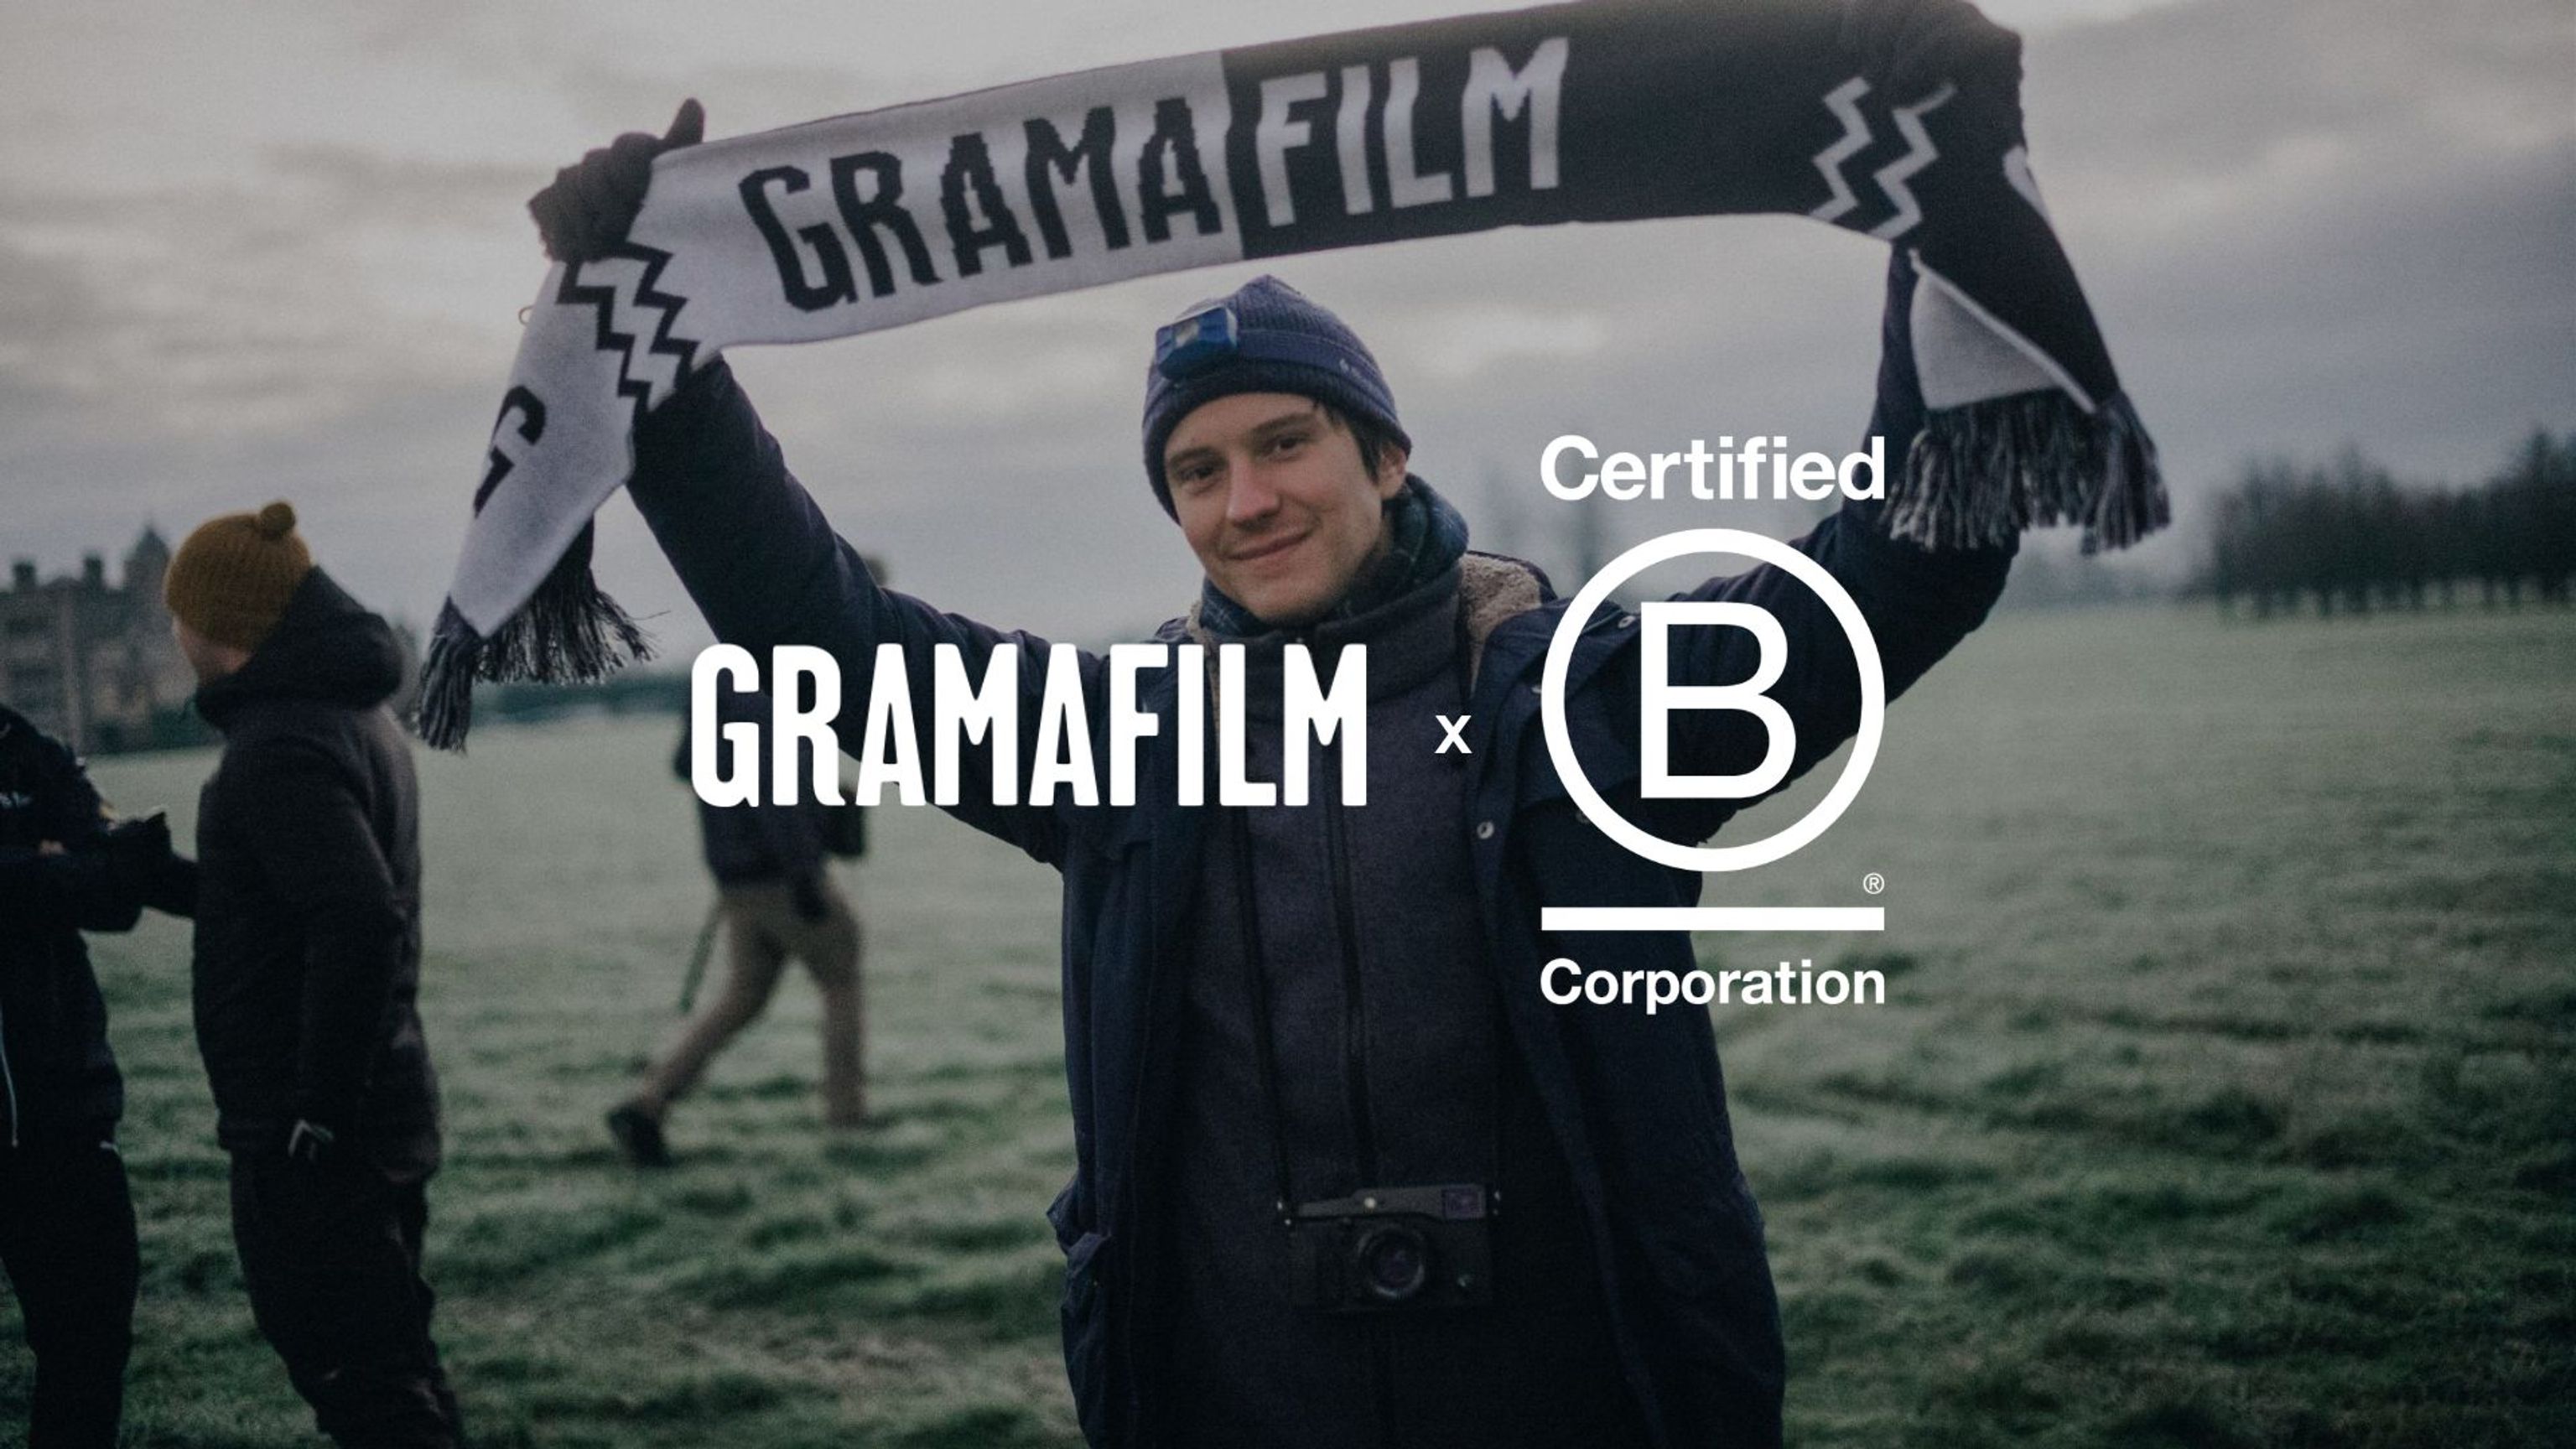 Gramafilm - Lights, camera, B Corp! Gramafilm certified as B Corp